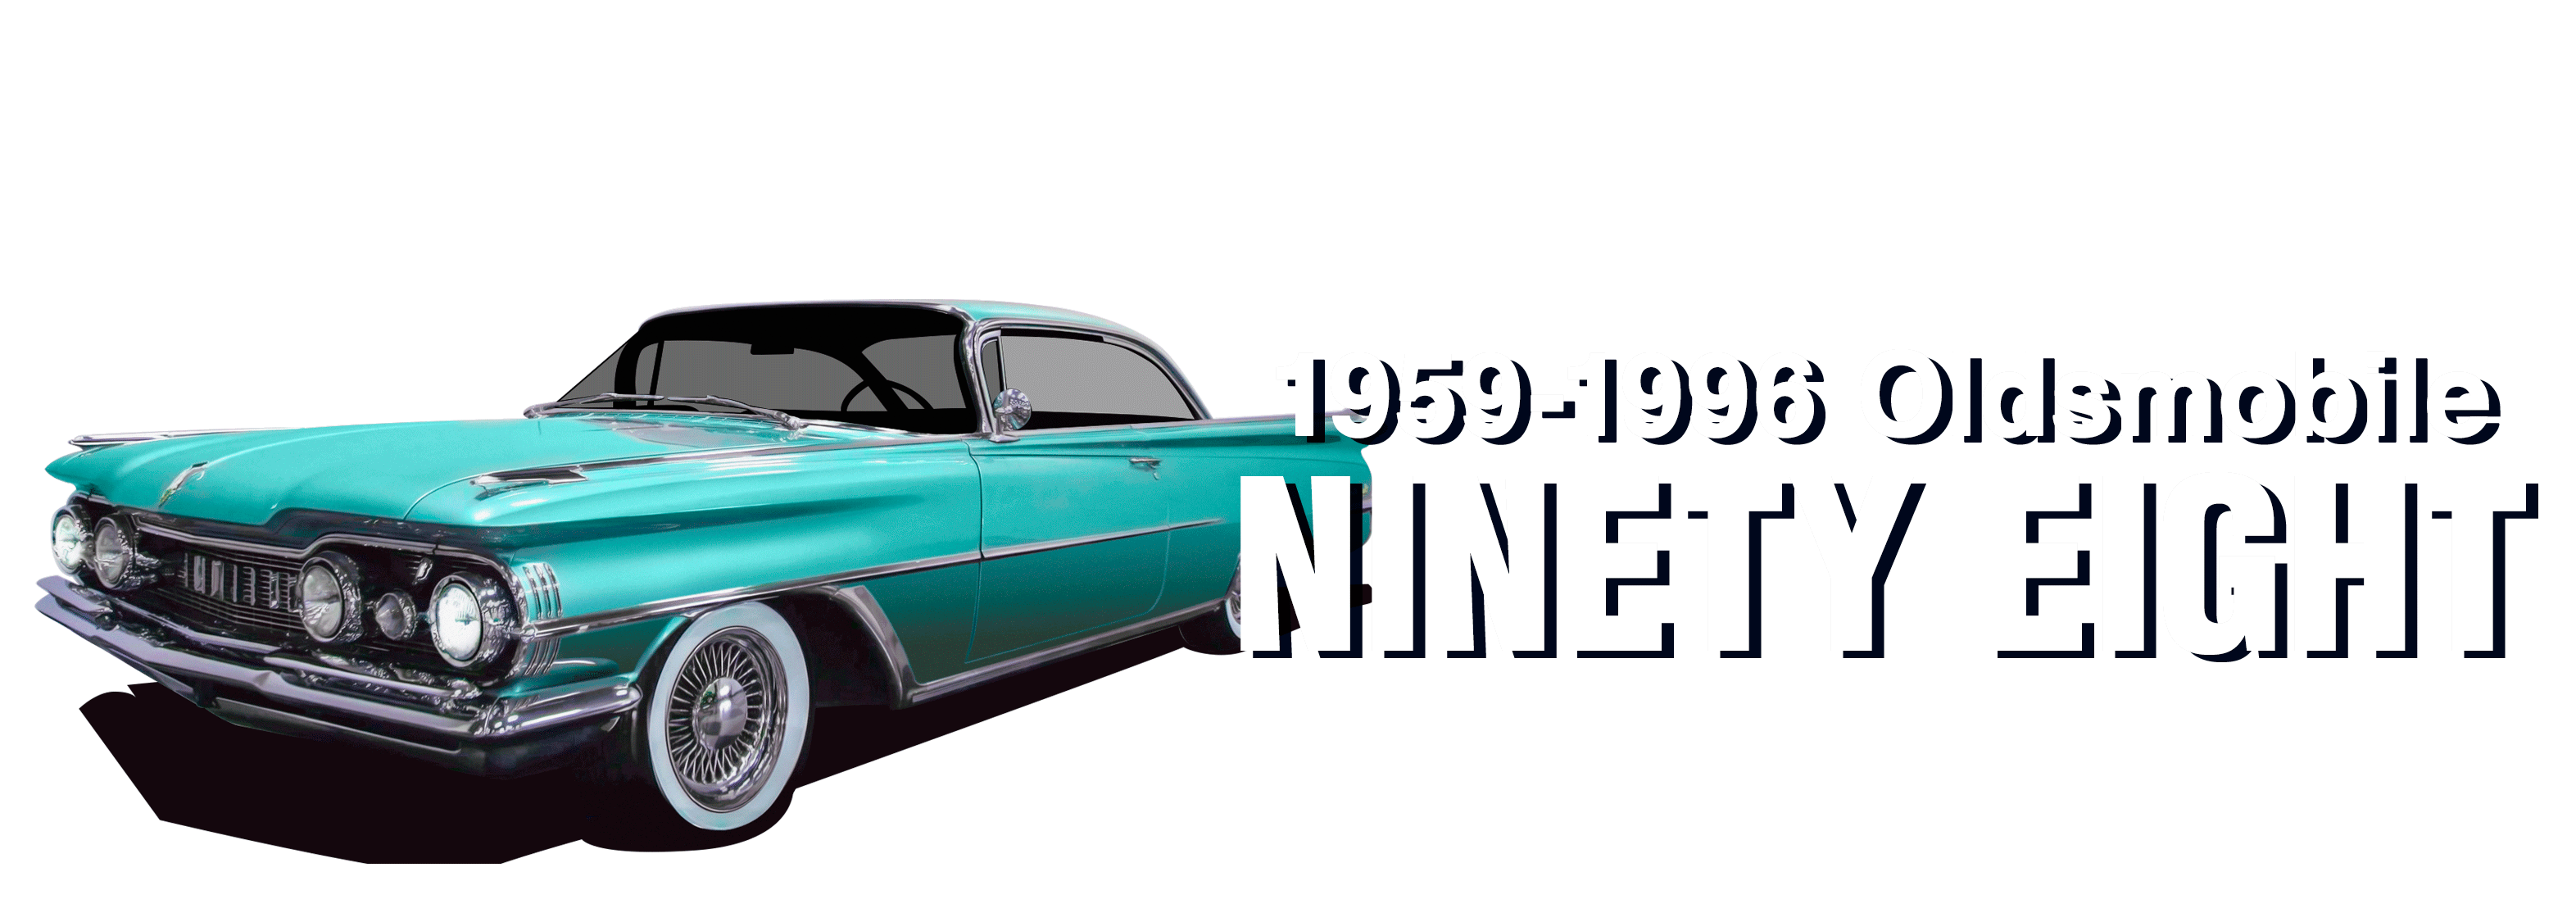 Oldsmobile-NinetyEight-vehicle-desktop_V2